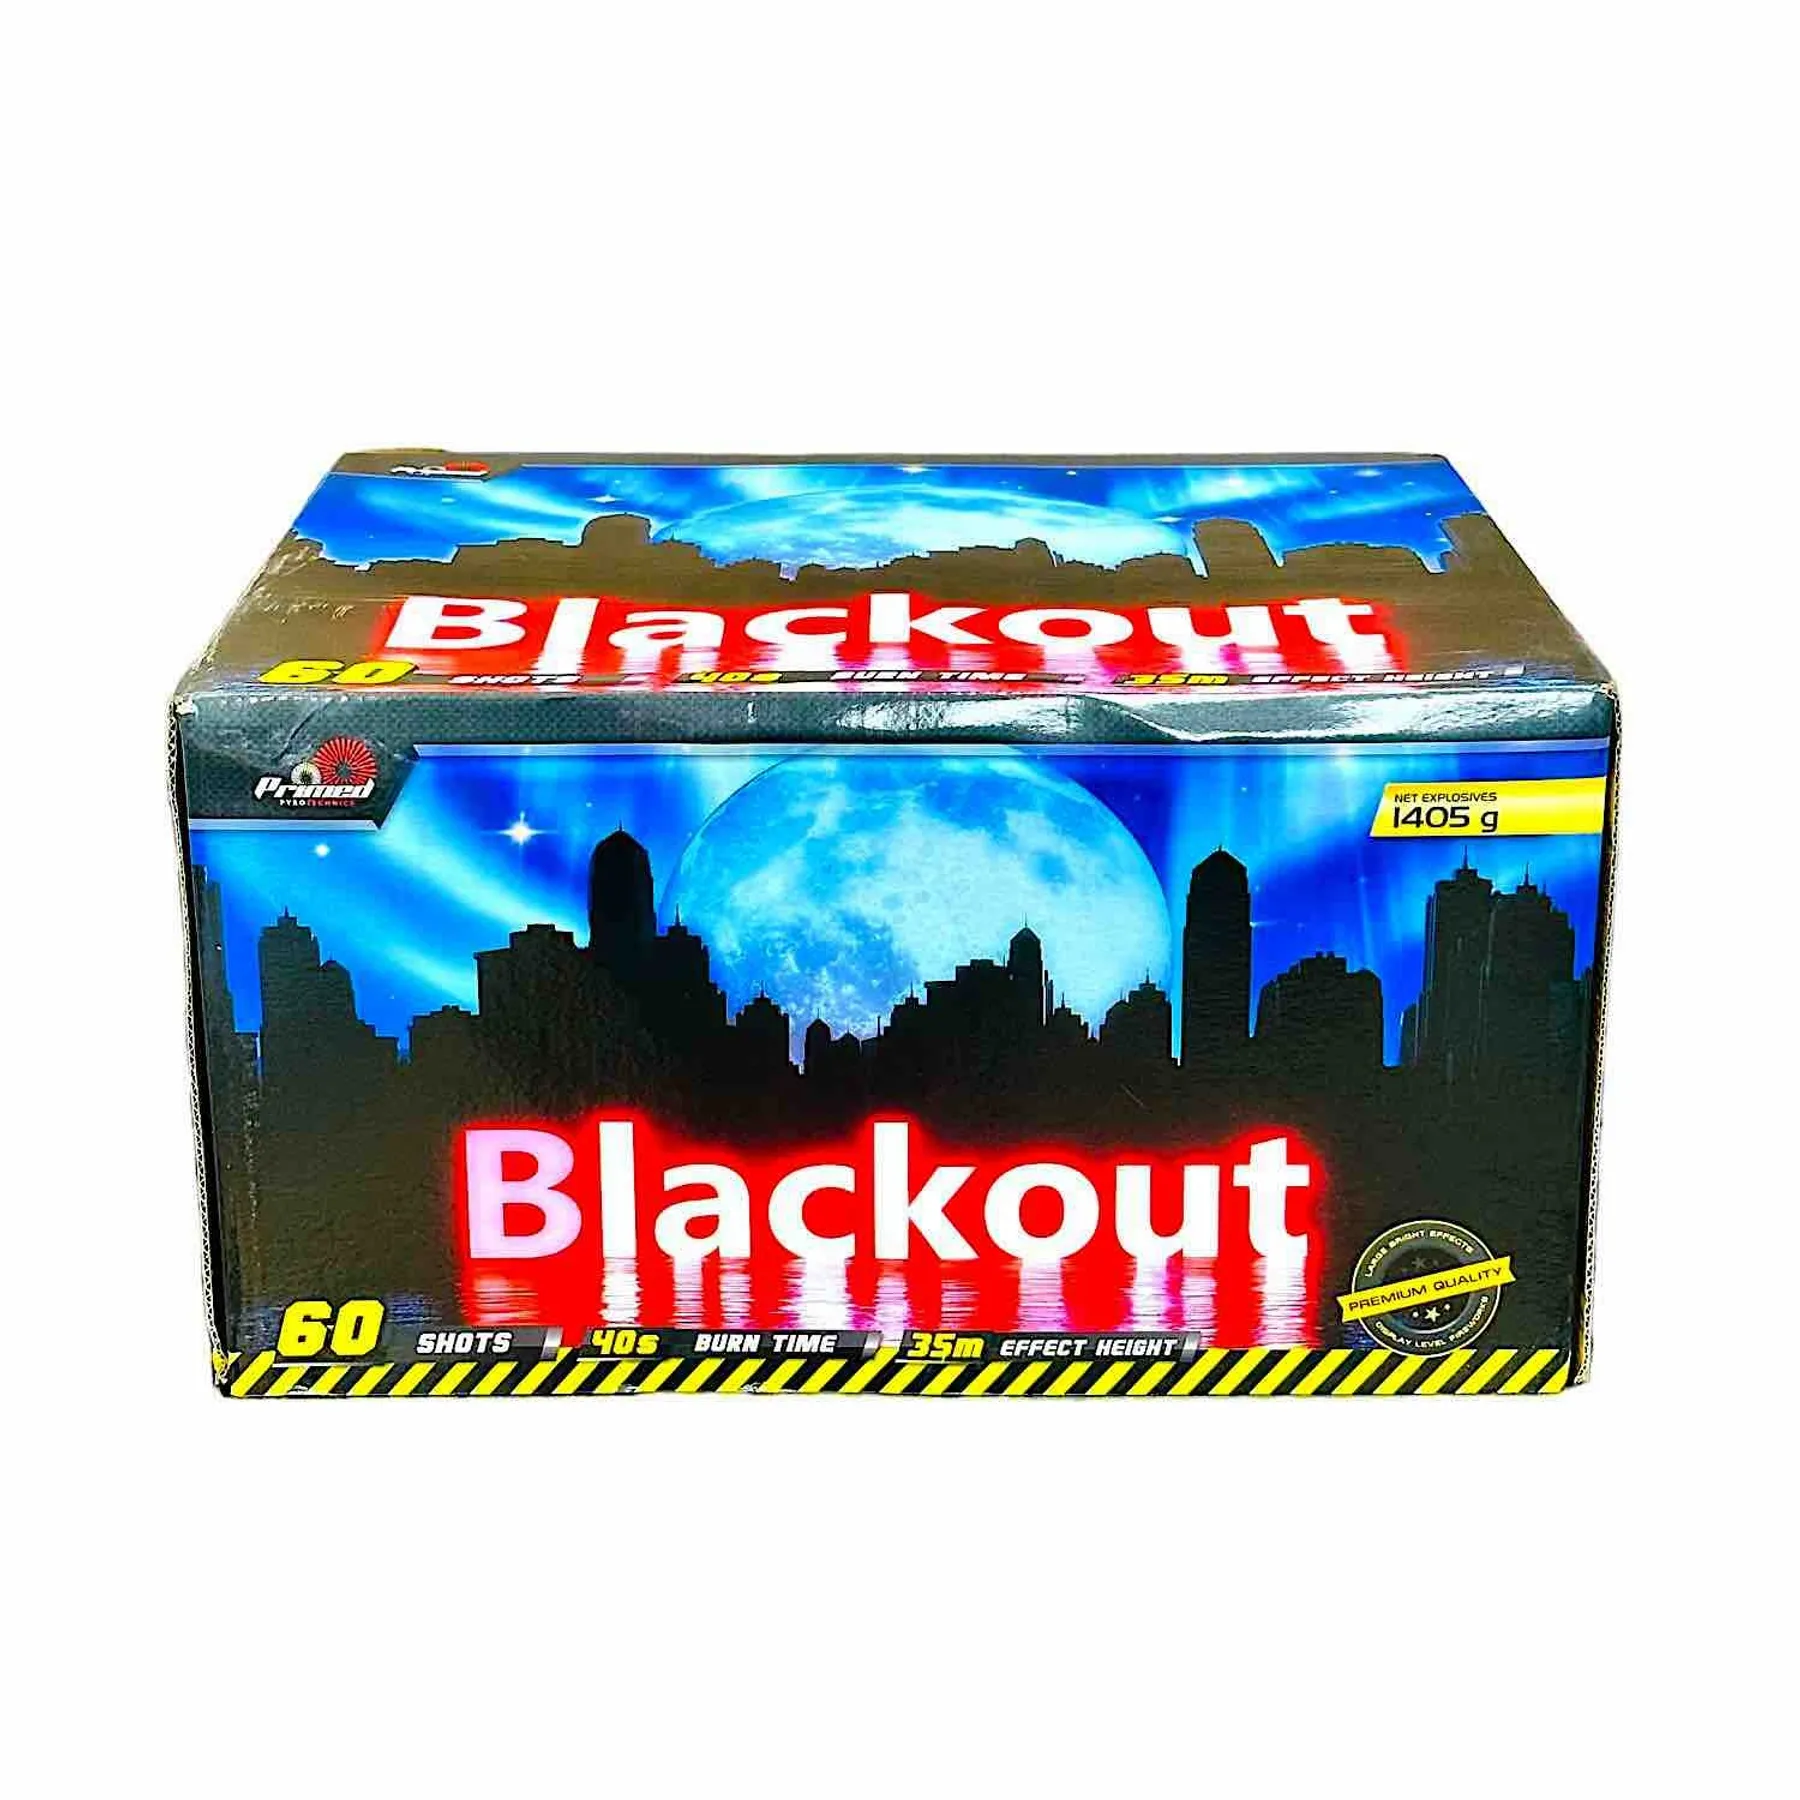 Blackout Primed Pyrotechnics Manchester Fireworks